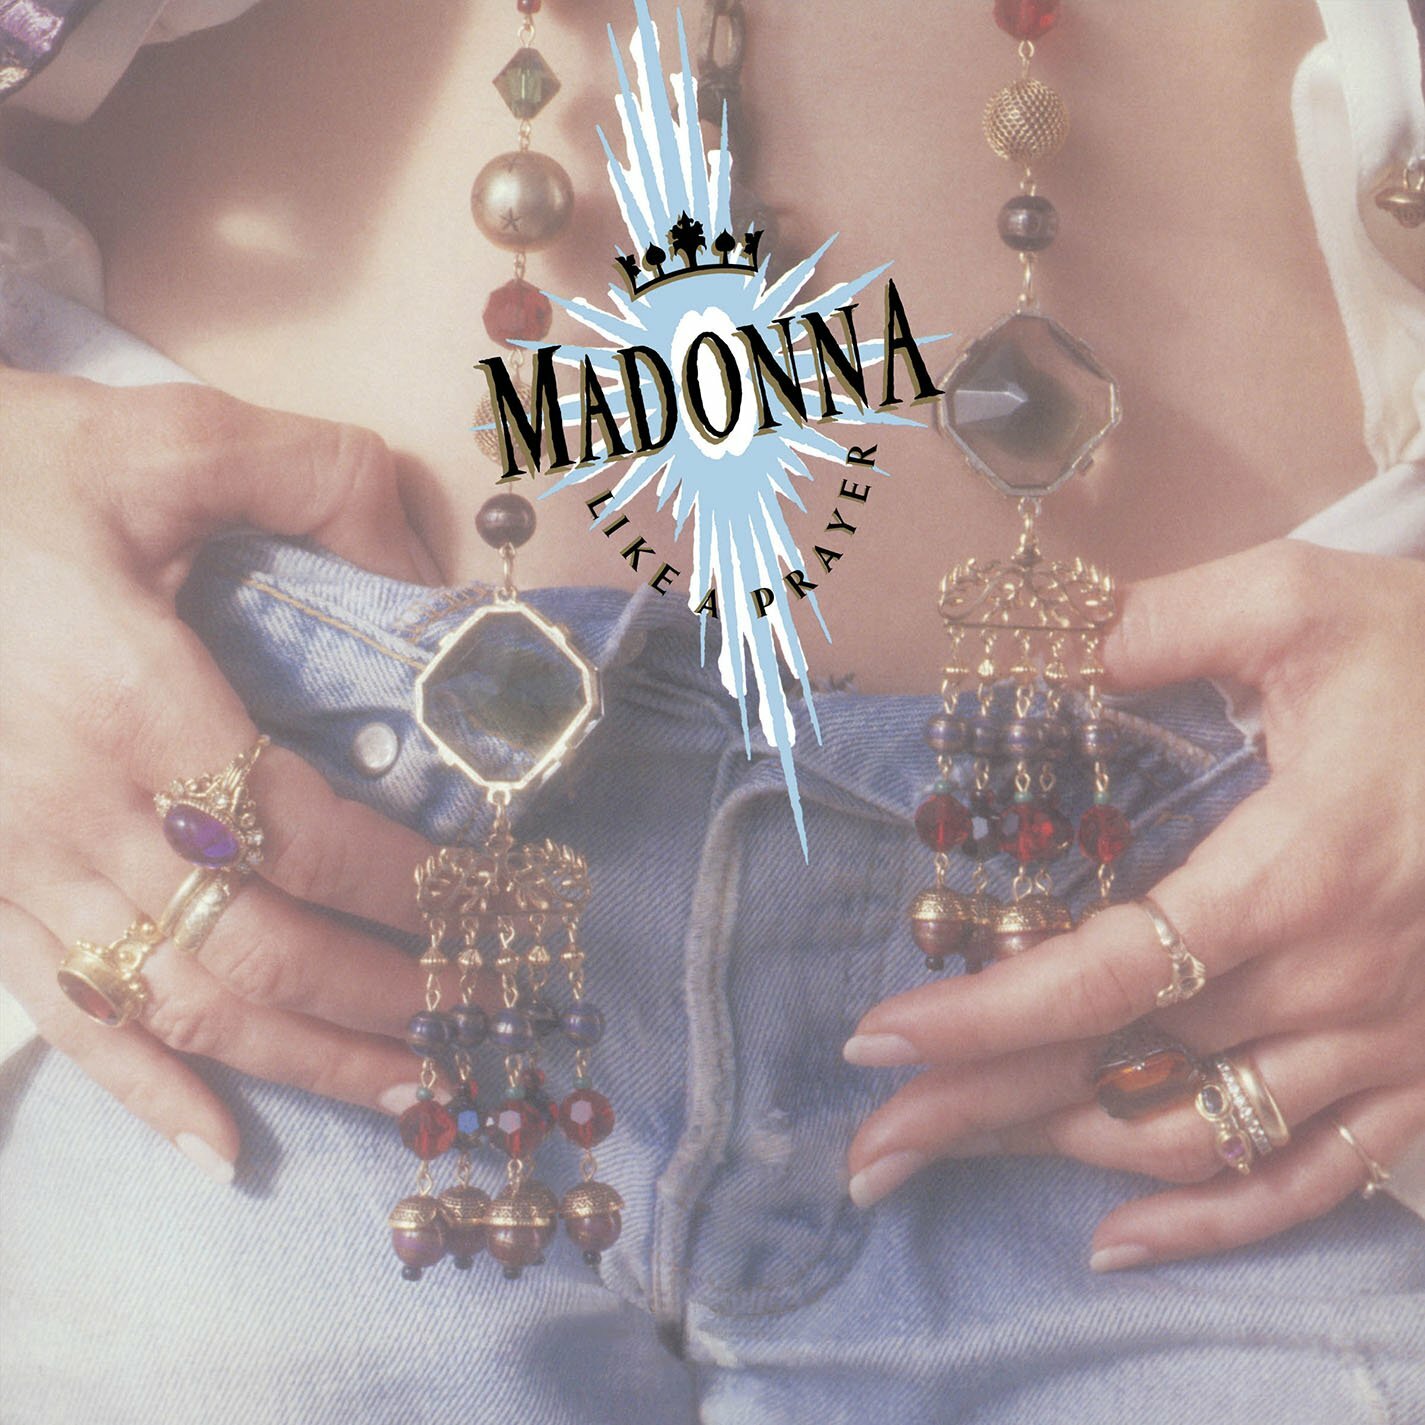 Madonna Like a Prayer Виниловая пластинка Warner Music - фото №13